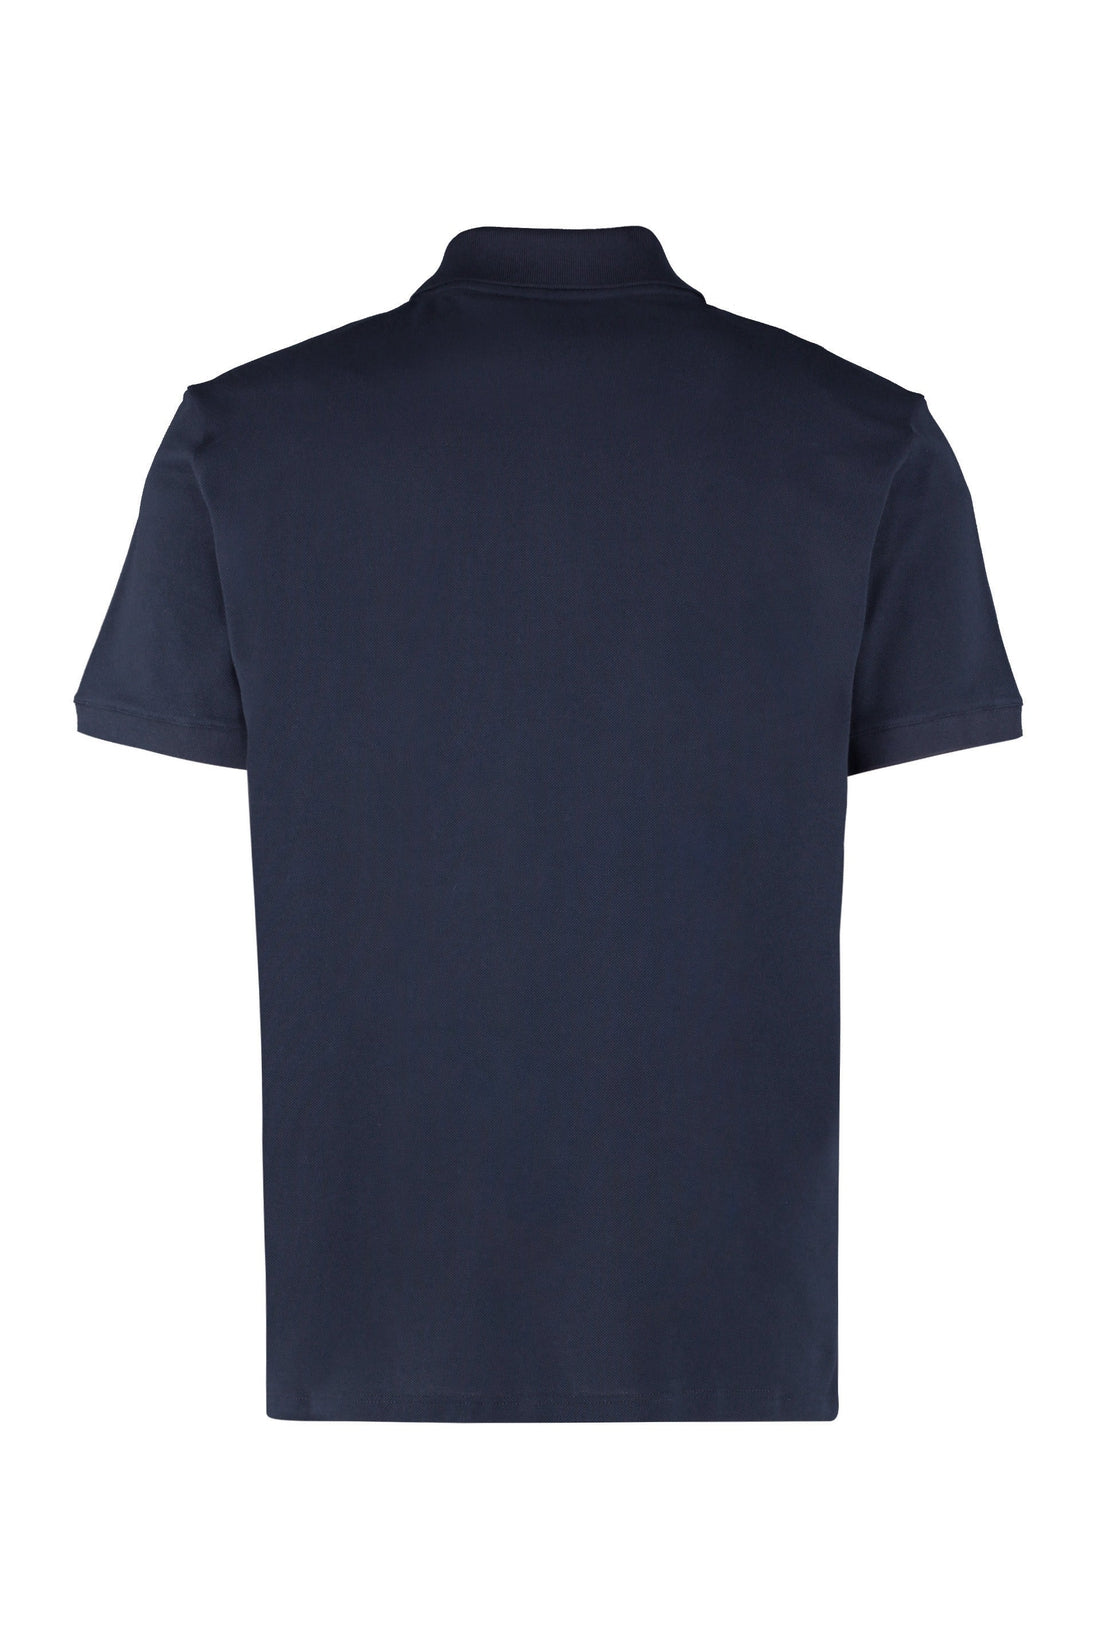 Alexander McQueen-OUTLET-SALE-Embroidered cotton-piqué polo shirt-ARCHIVIST